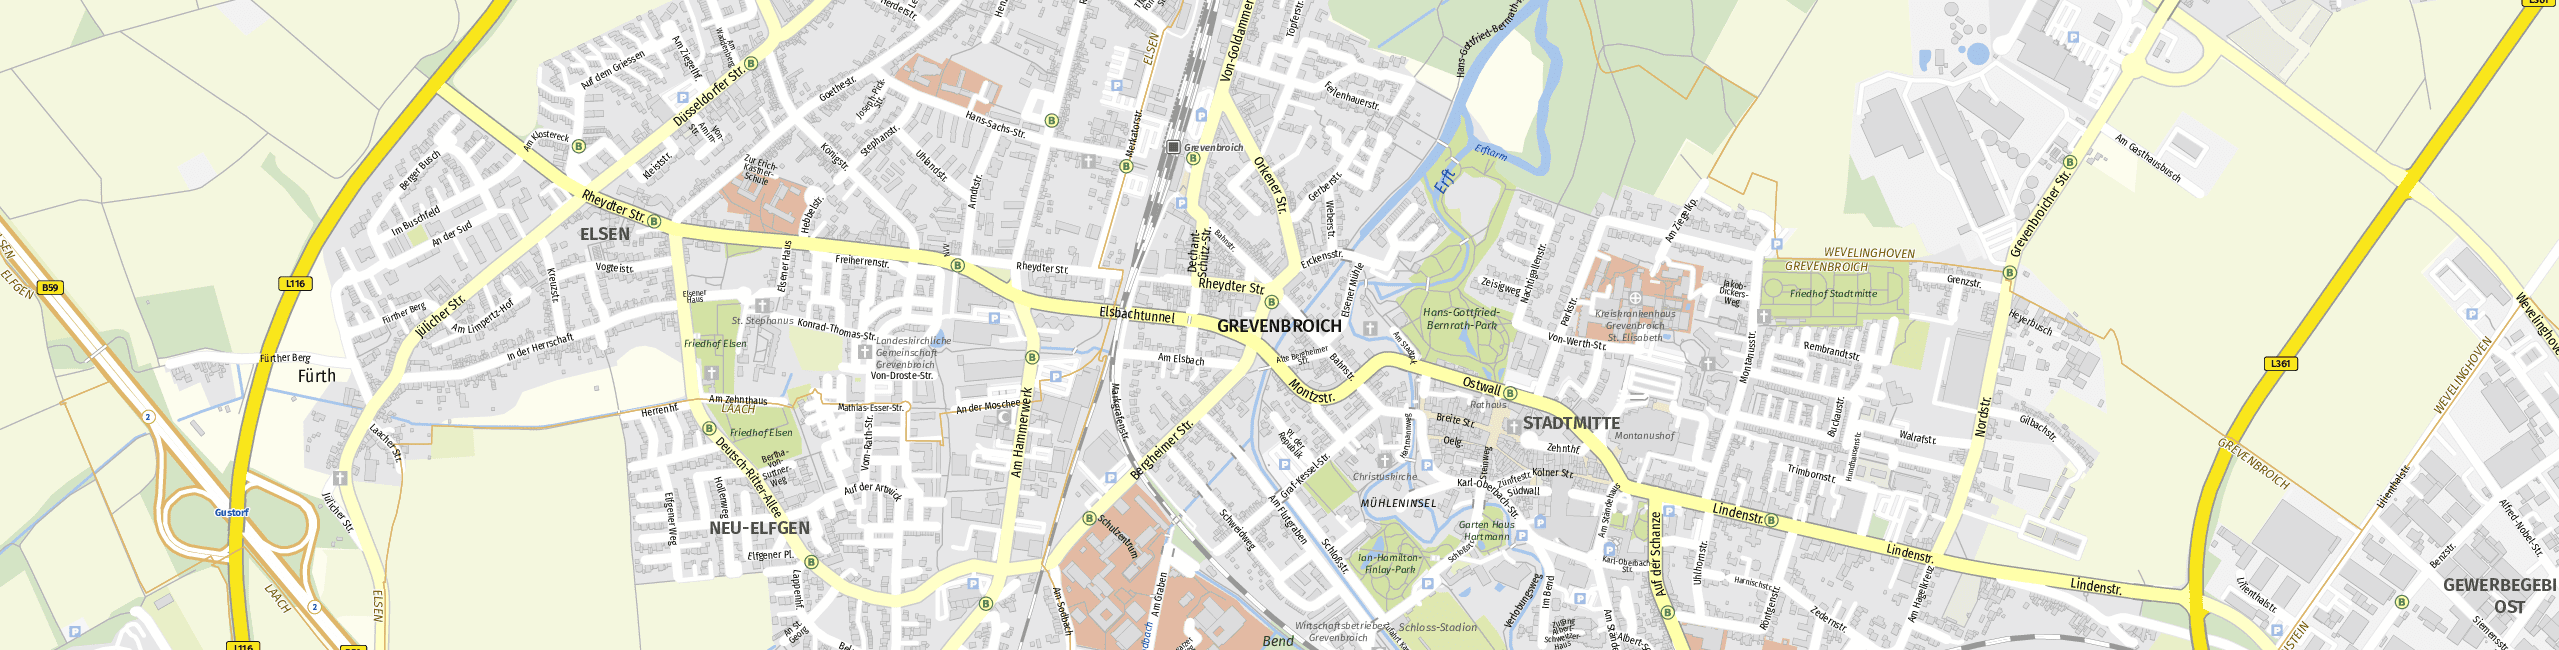 Stadtplan Grevenbroich zum Downloaden.